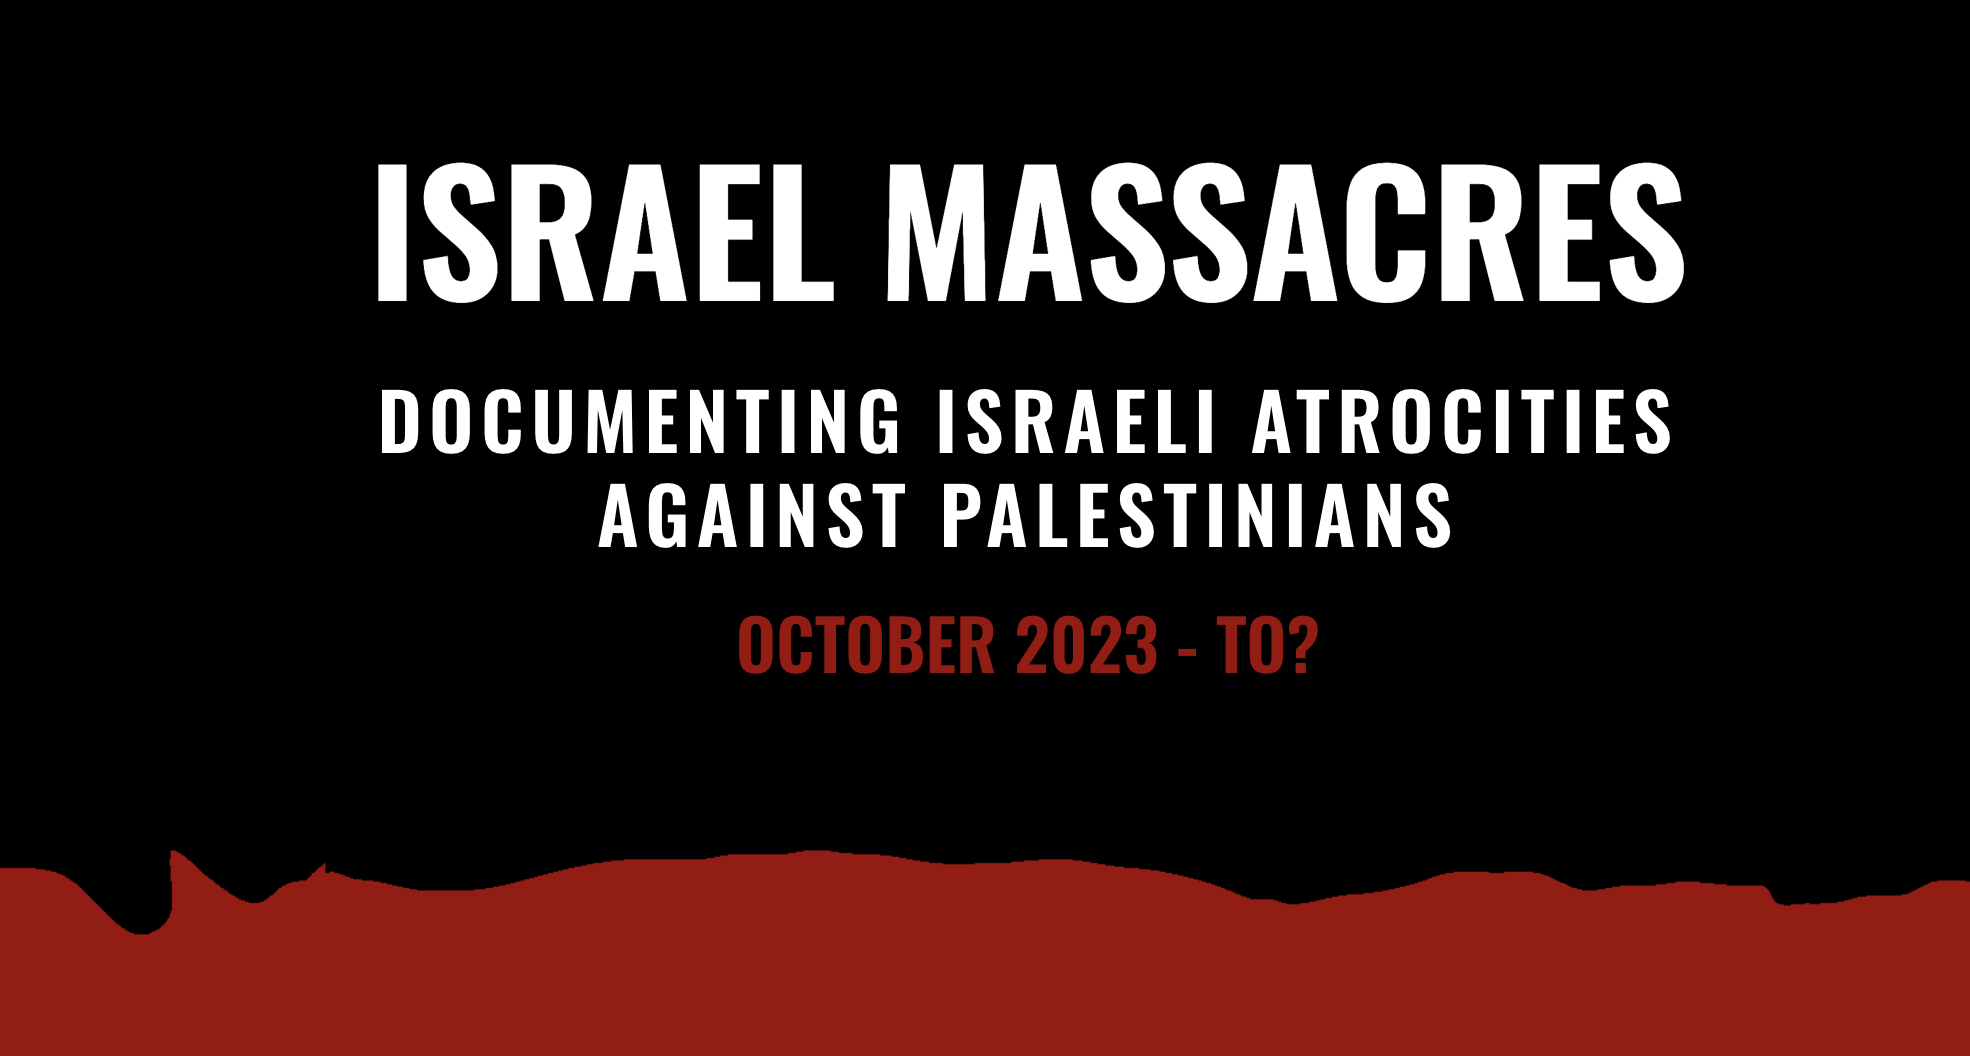 (c) Israel-massacres.com